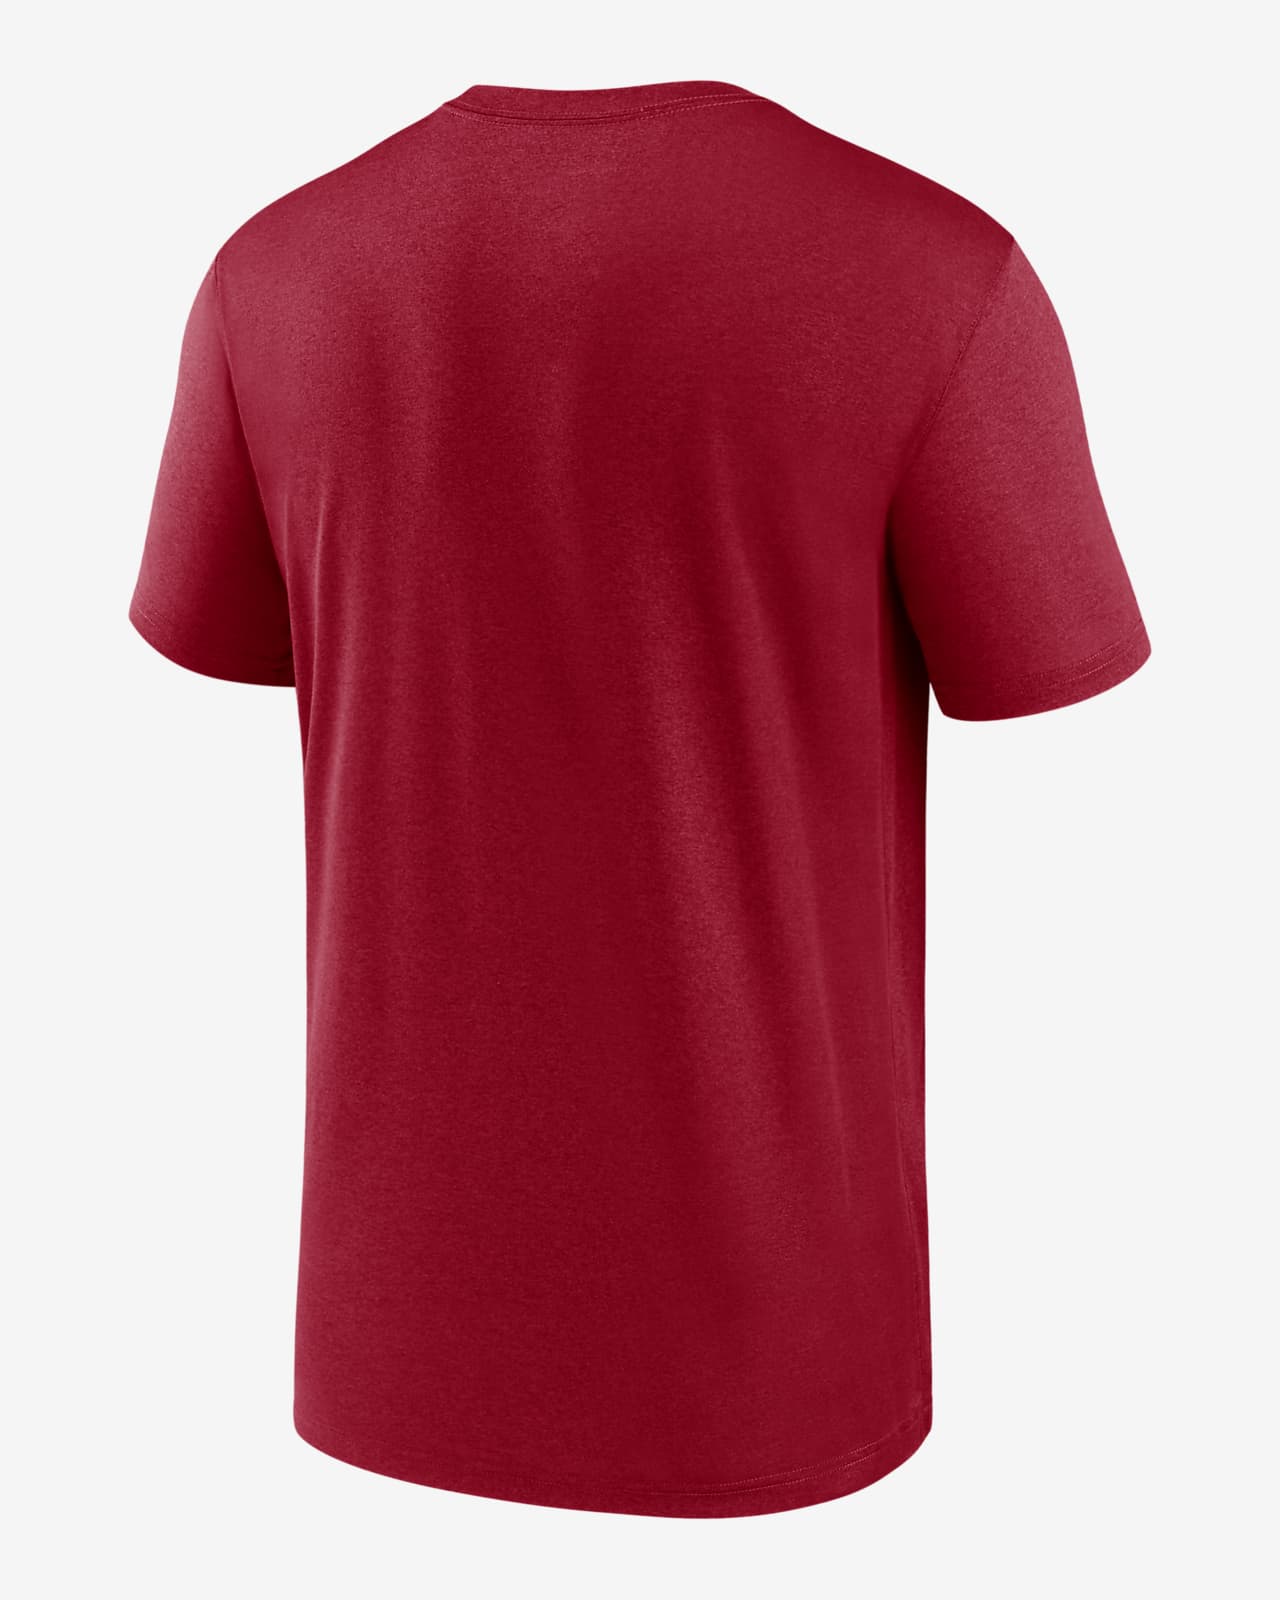 Nike Men's Red Boston Red Sox Wordmark Legend T-Shirt - Red